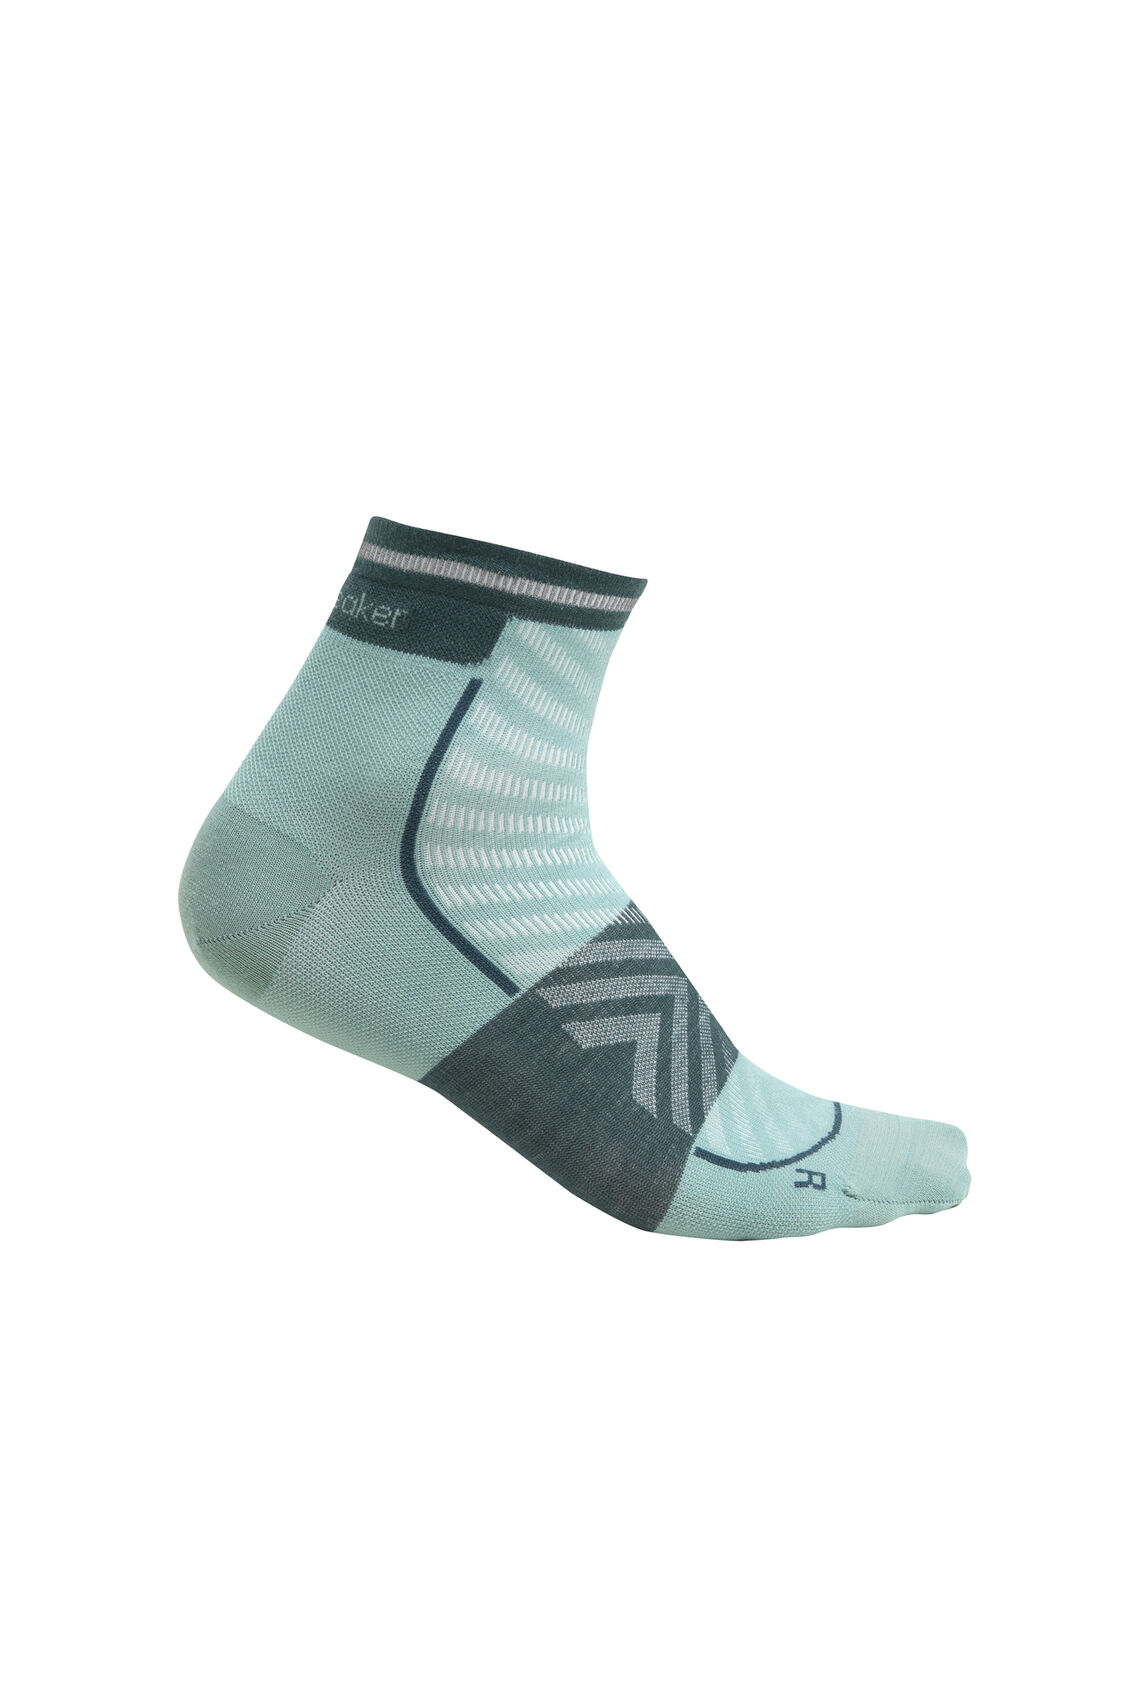 Icebreaker Merino Blend Run+ Ultralight Mini Socks (Men's) - Cloud Ray/Green Fathom  - Find Your Feet Australia Hobart Launceston Tasmania